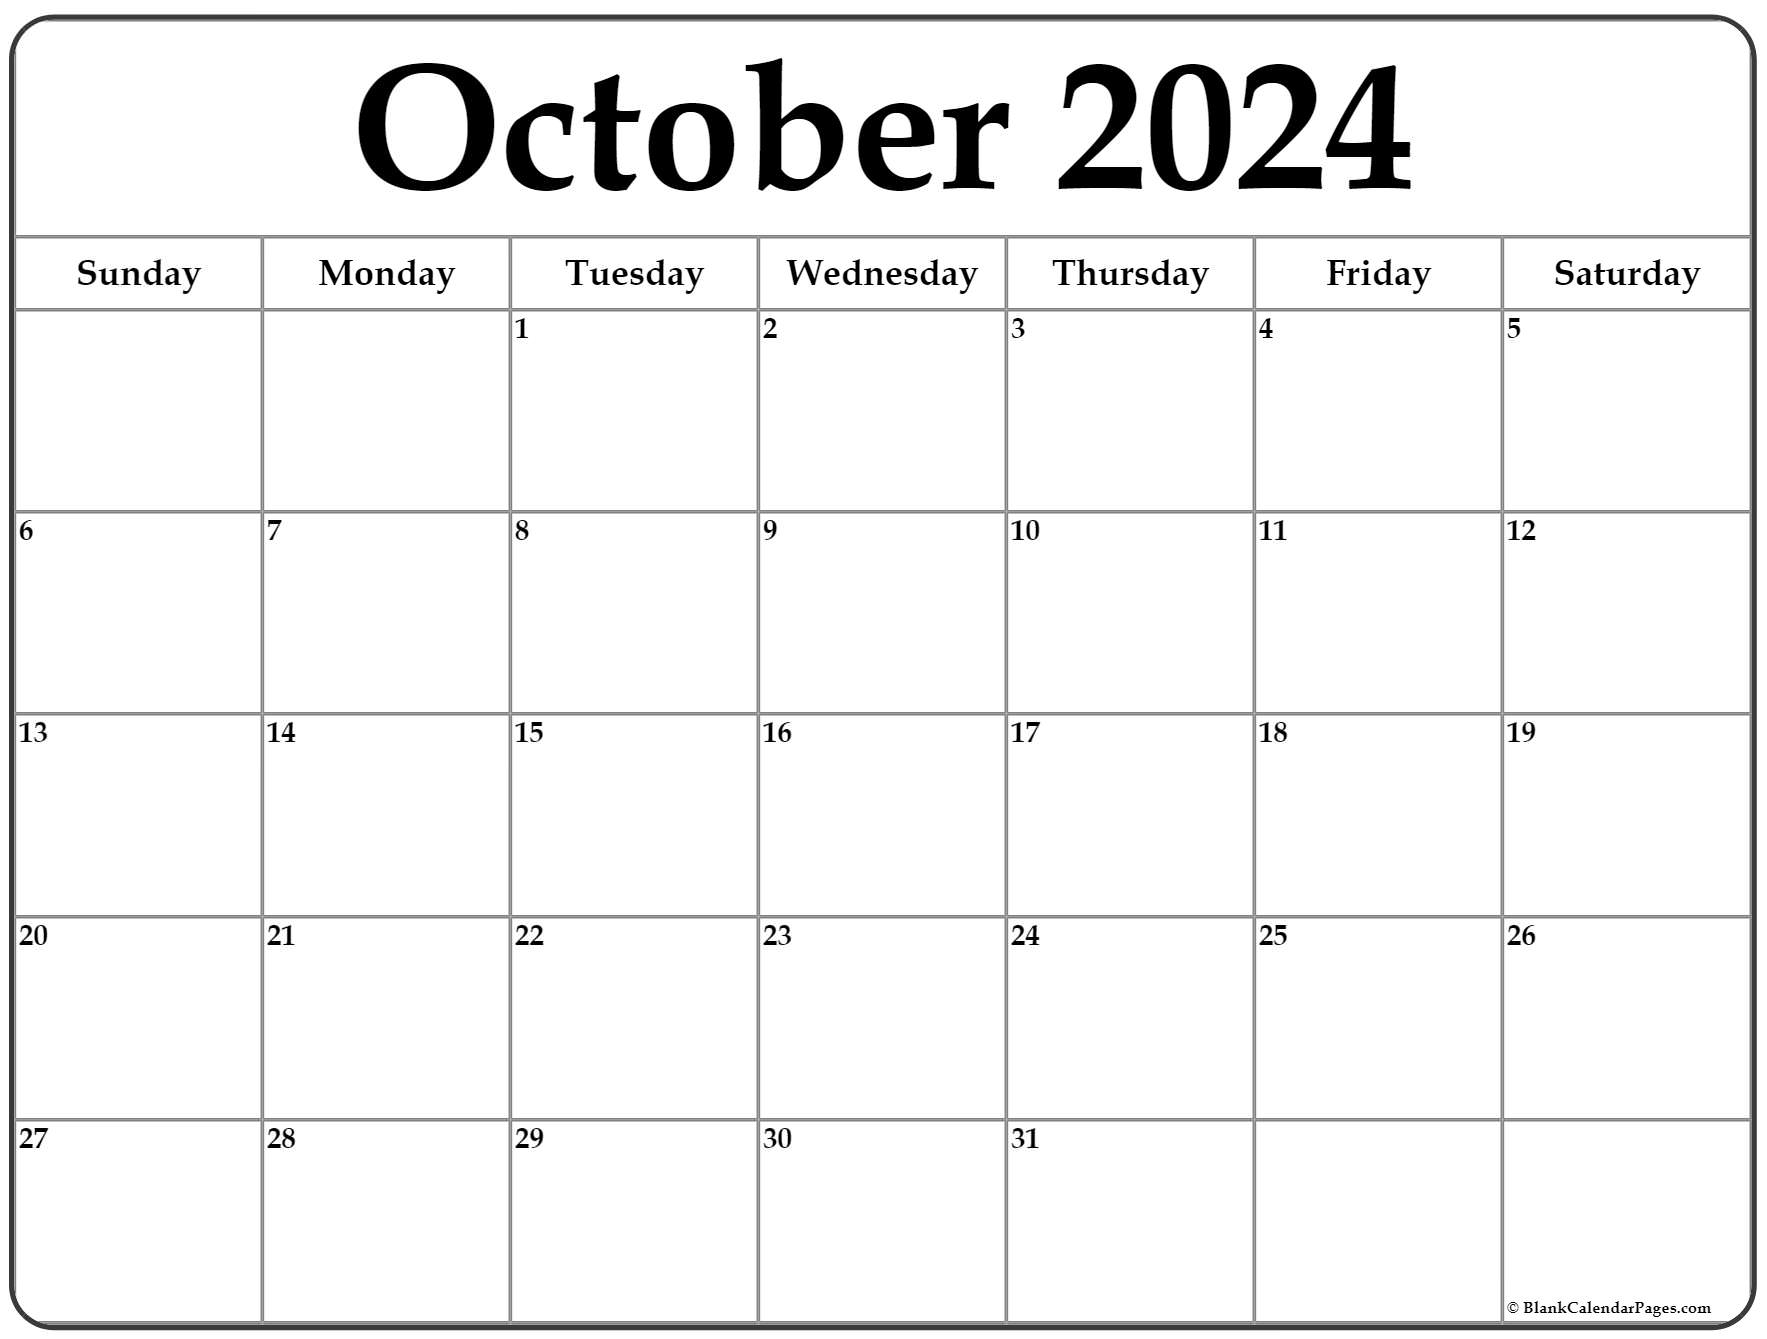 Print October 2022 Calendar October 2022 Calendar | Free Printable Calendar Templates